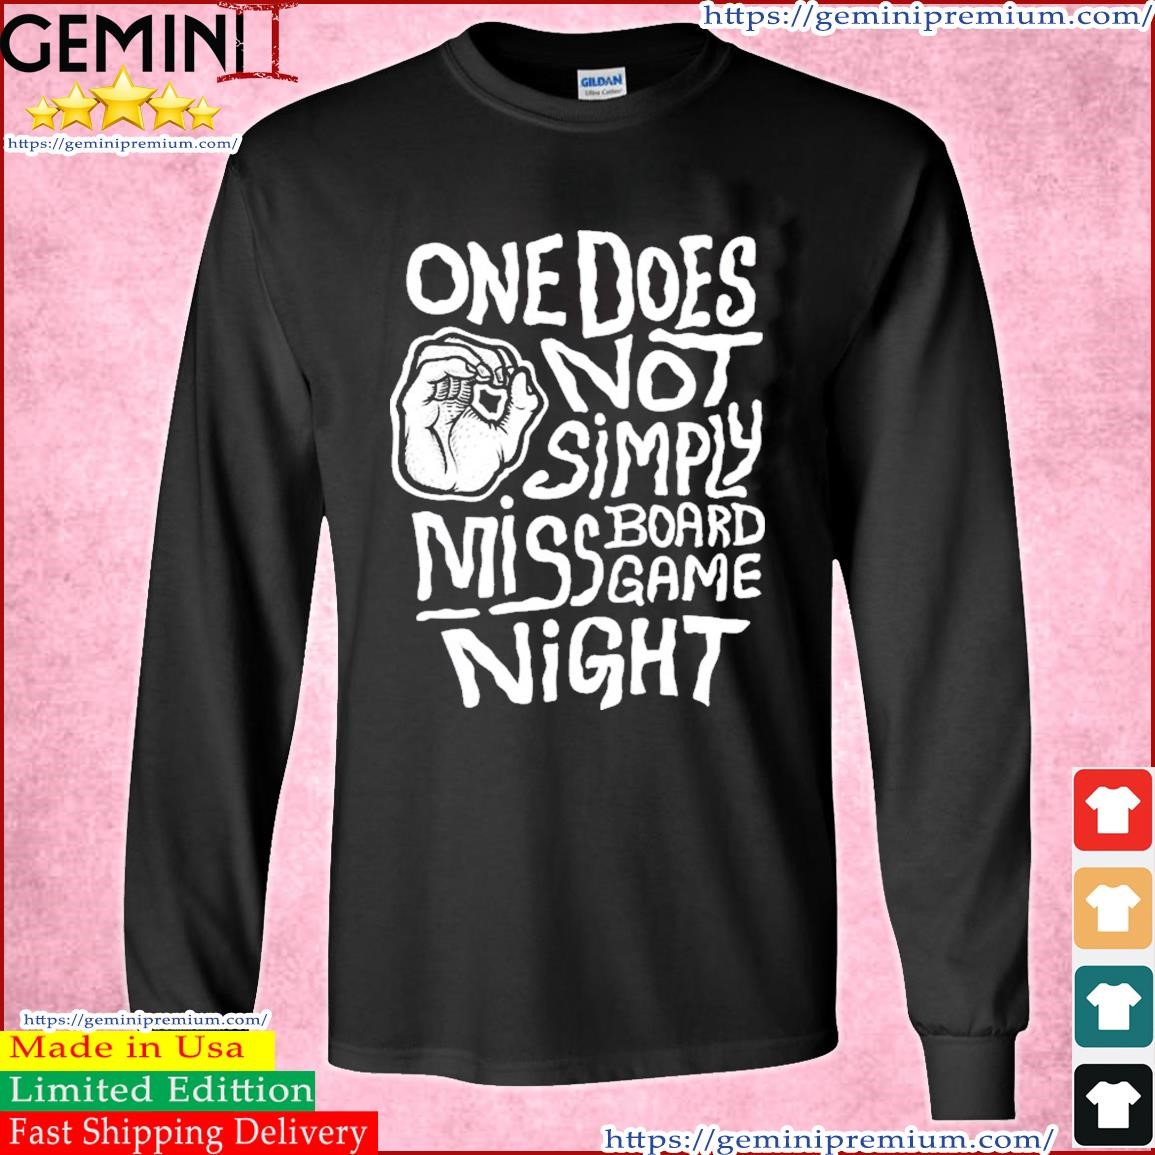 One Does Not Simply Miss Board Game Night Dark Shirt Long Sleeve Tee.jpg